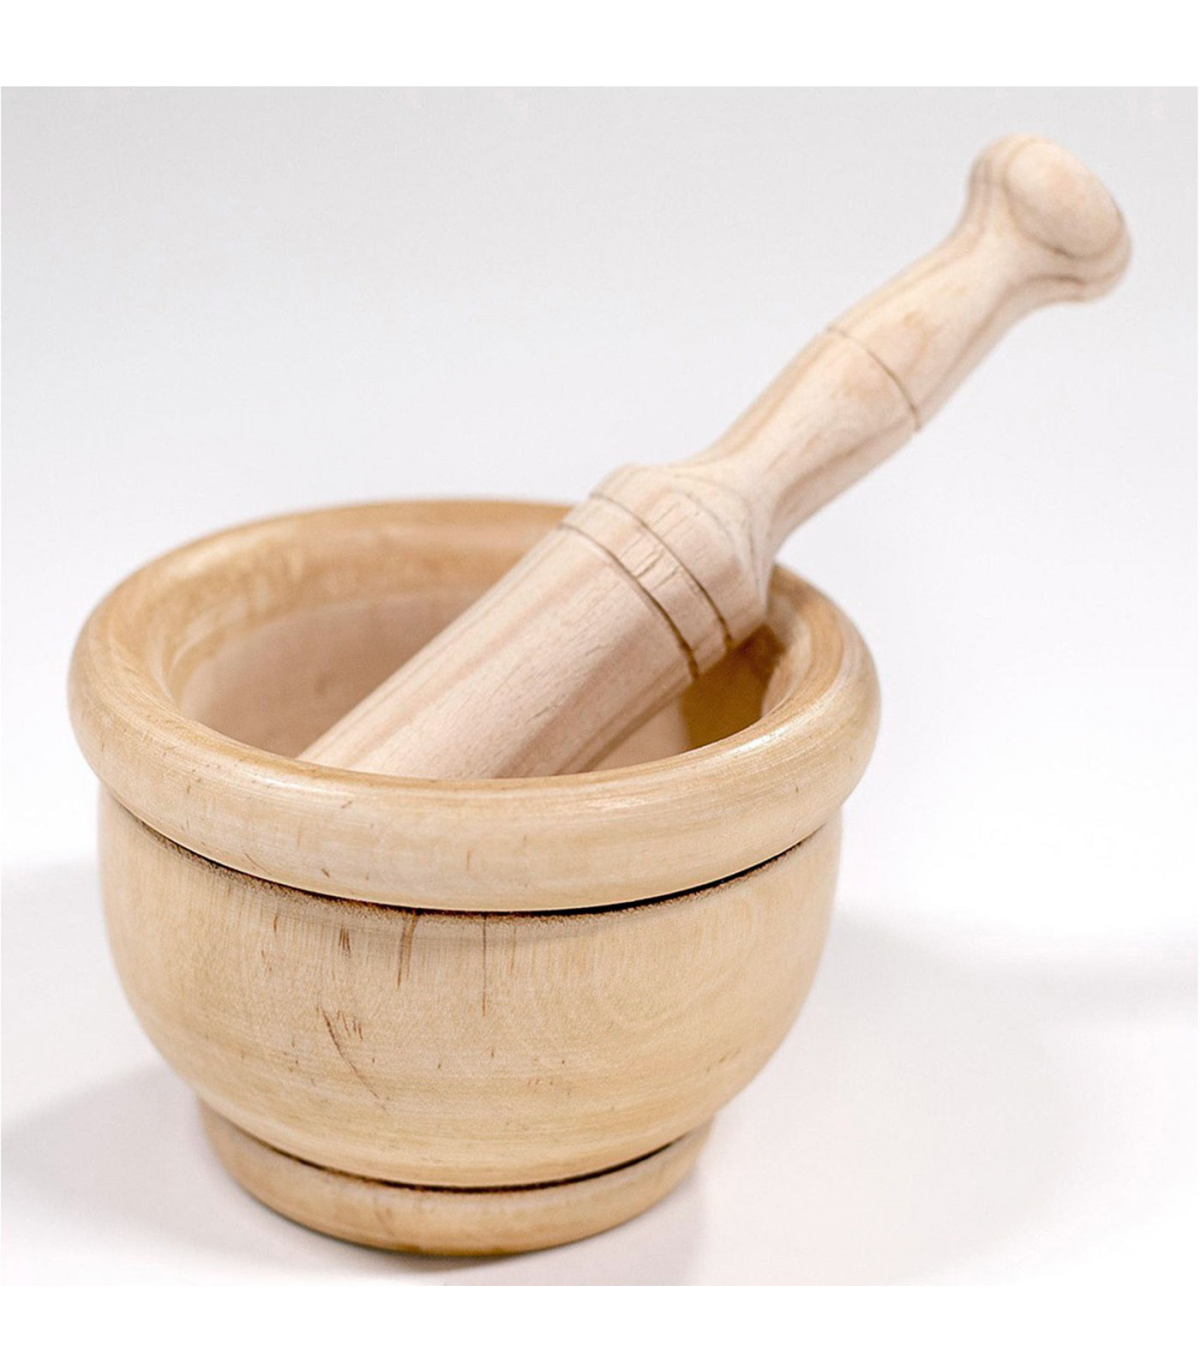 Tradineur - Mortero de madera natural - Incluye mazo de 16 cm